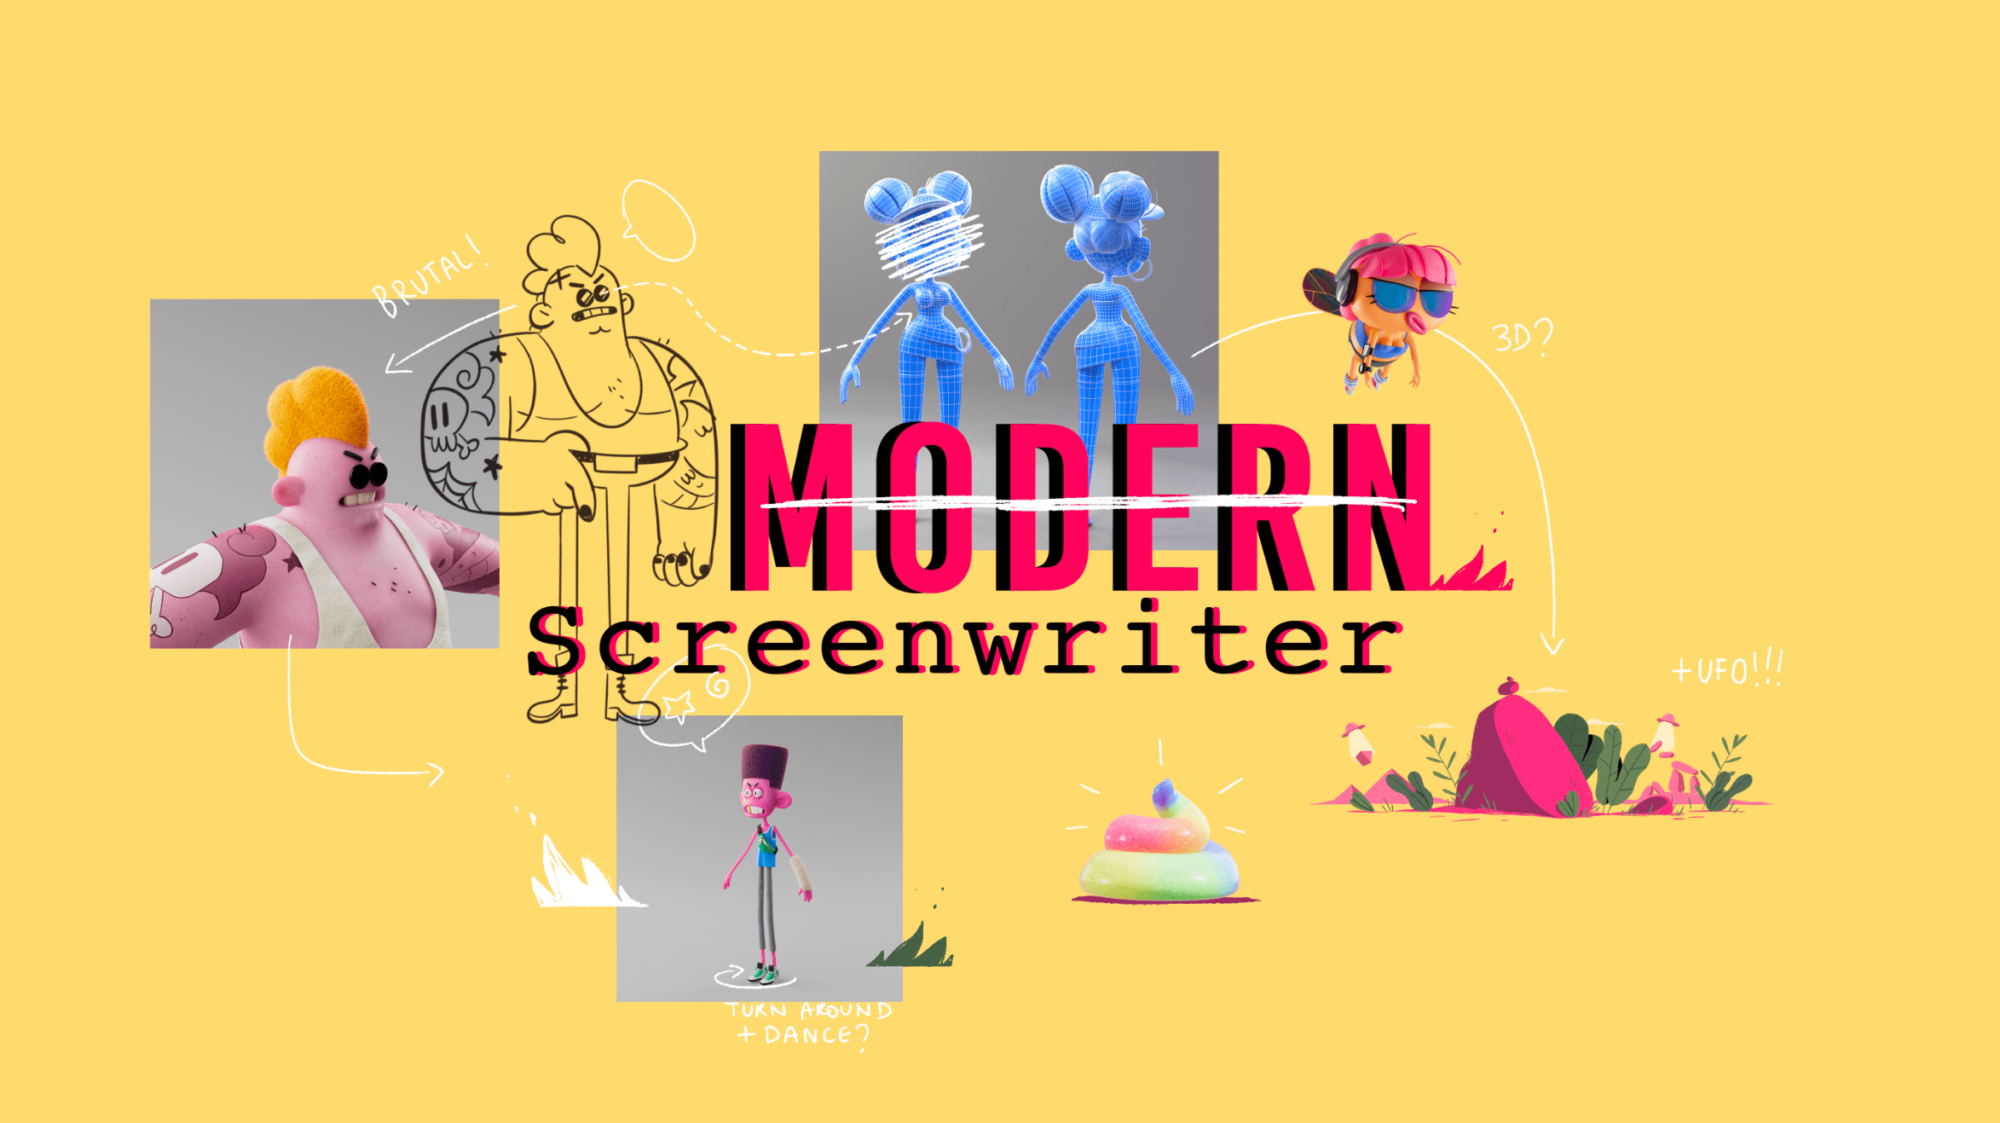 Motion Design School - Modern Screenwriter